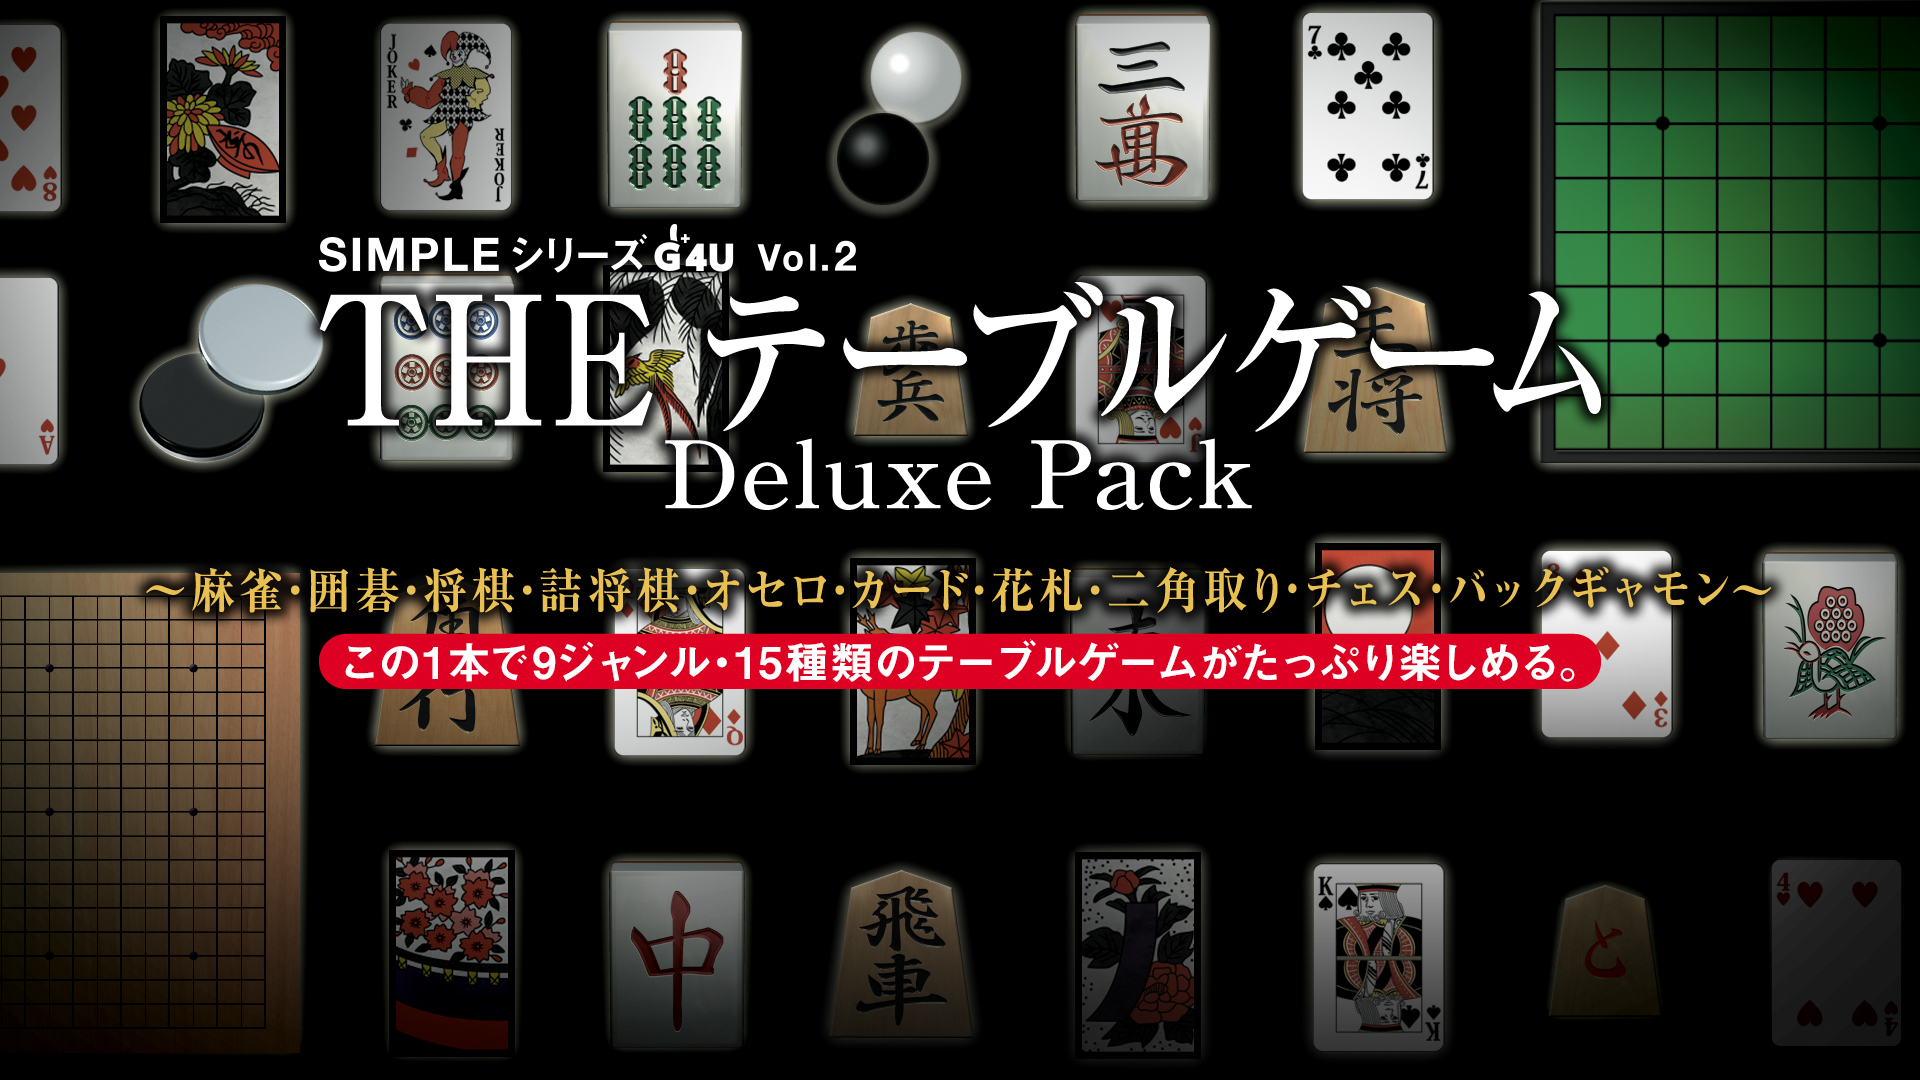 THE テーブルゲーム Deluxe Pack ～麻雀・囲碁・将棋・詰将棋・オセロ 